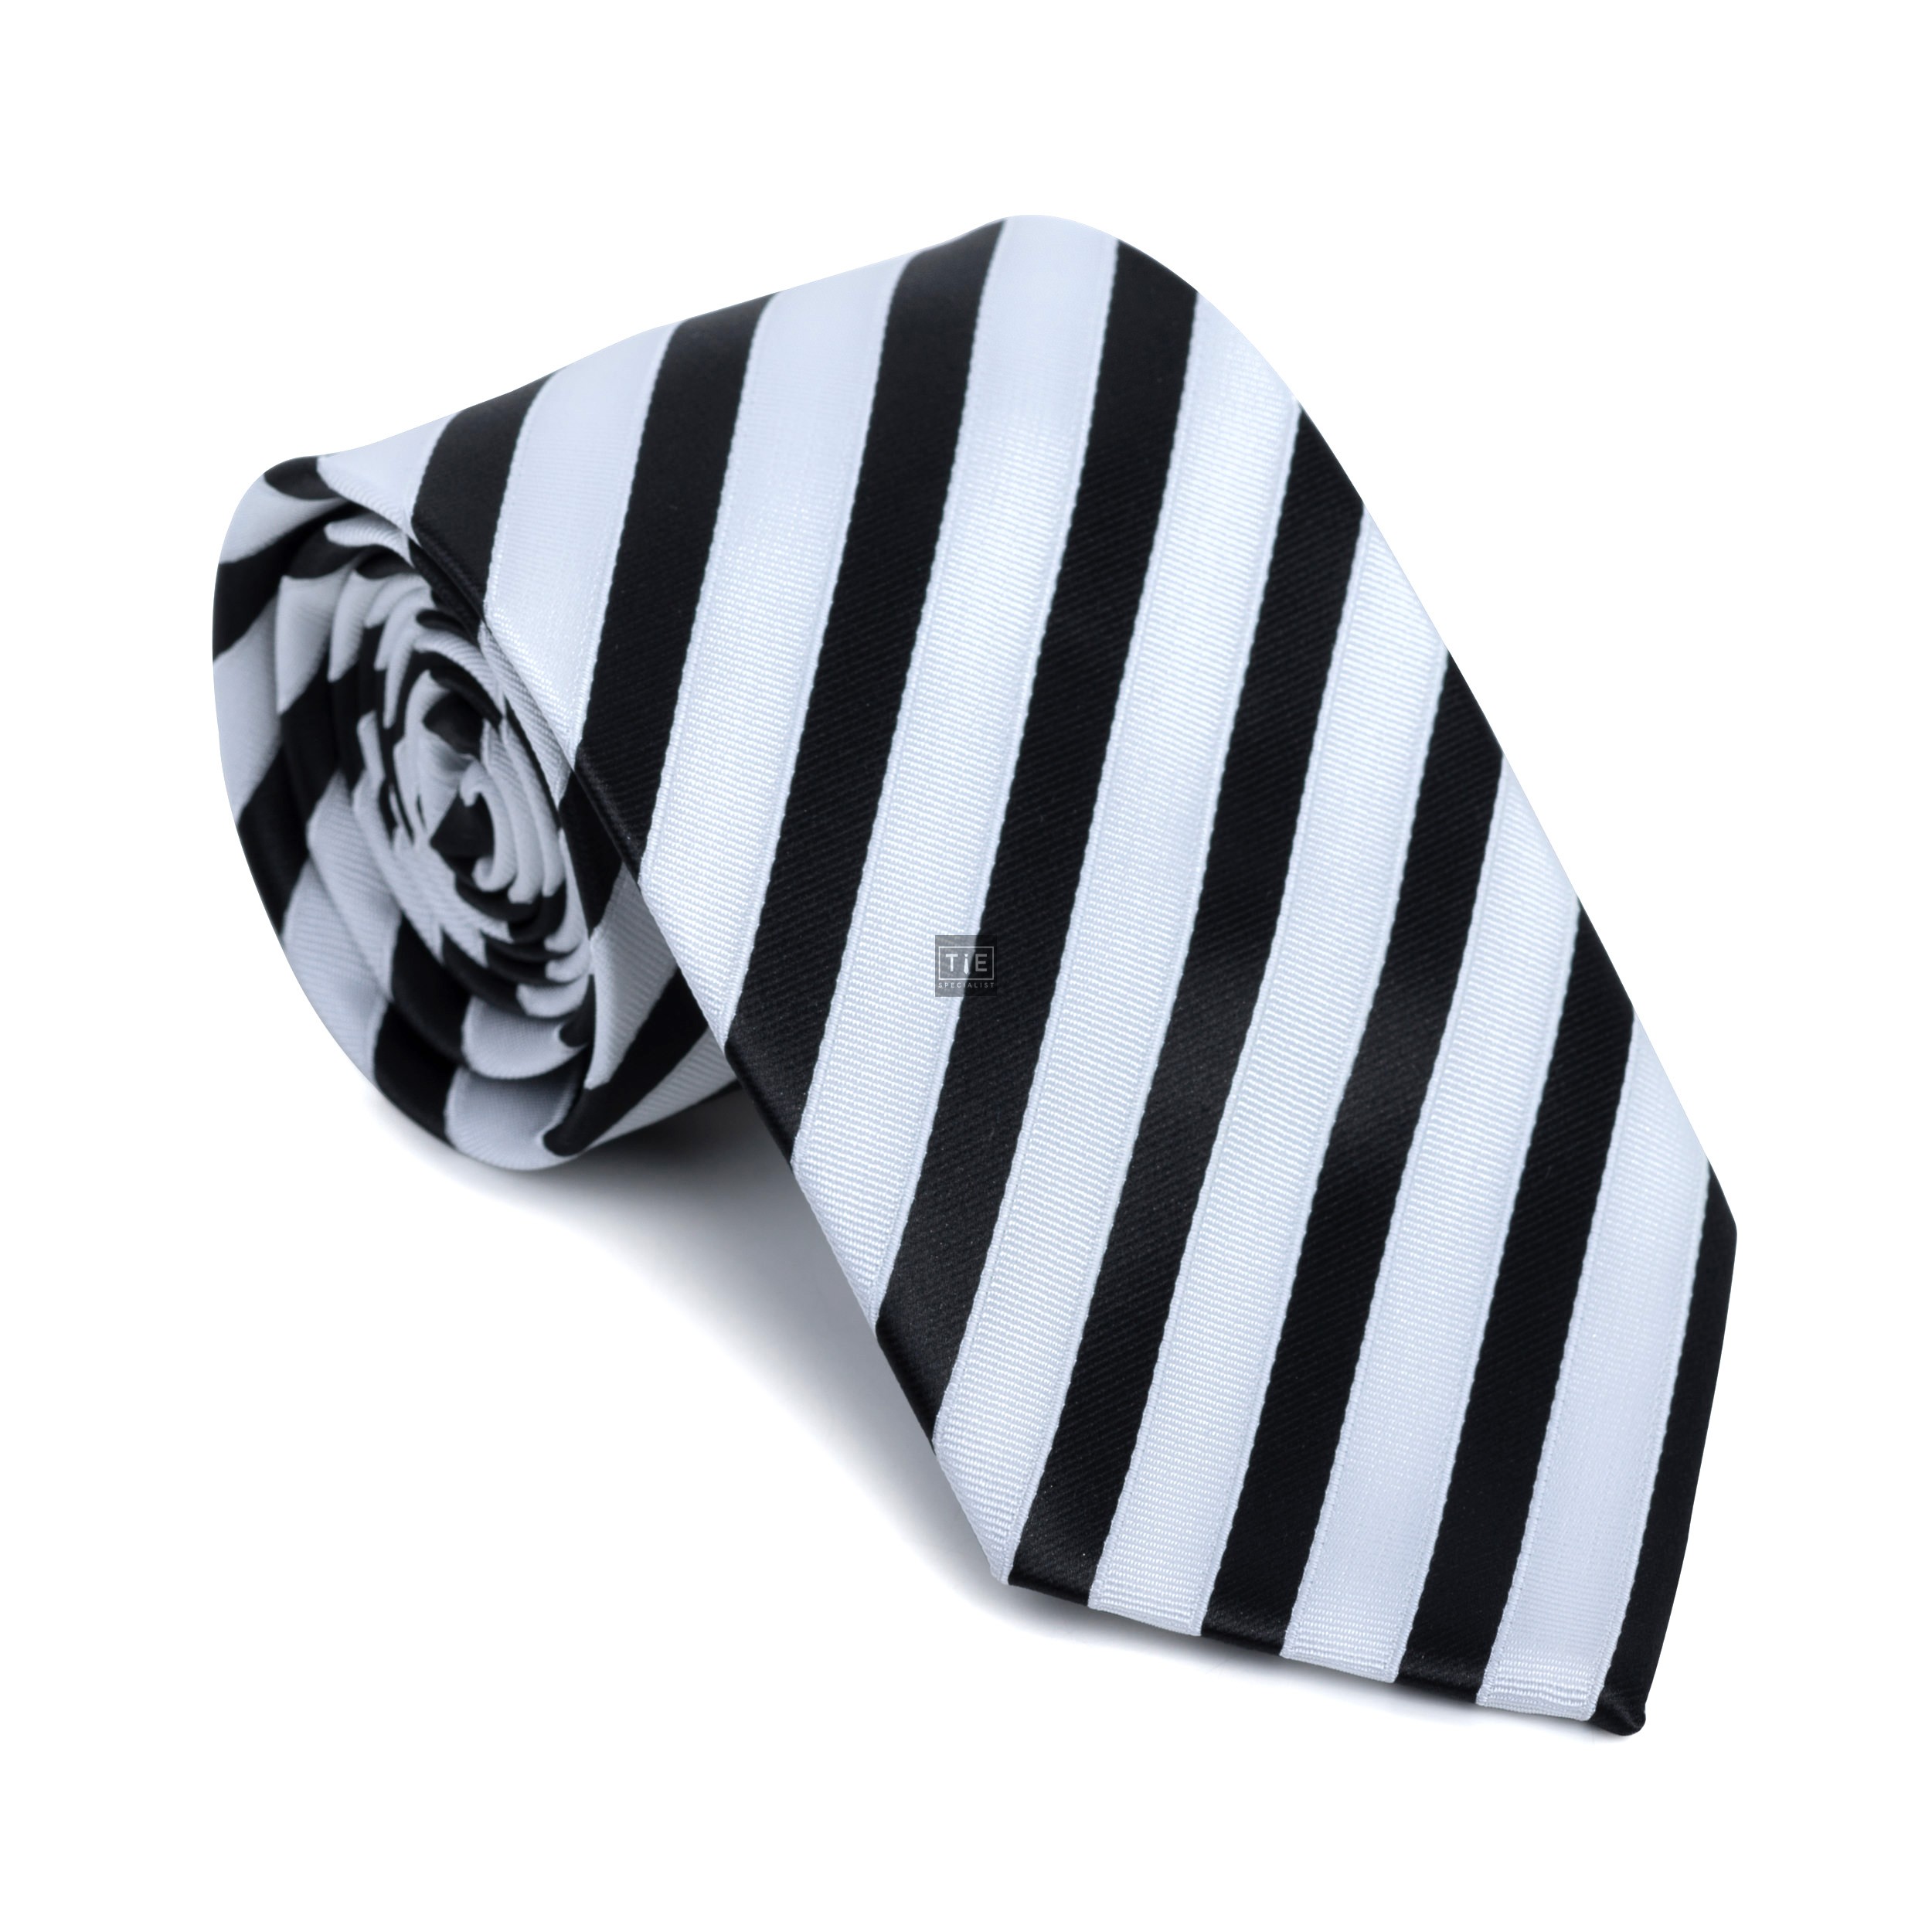 Black and White Stripe Football Tie #AB-T1019/1